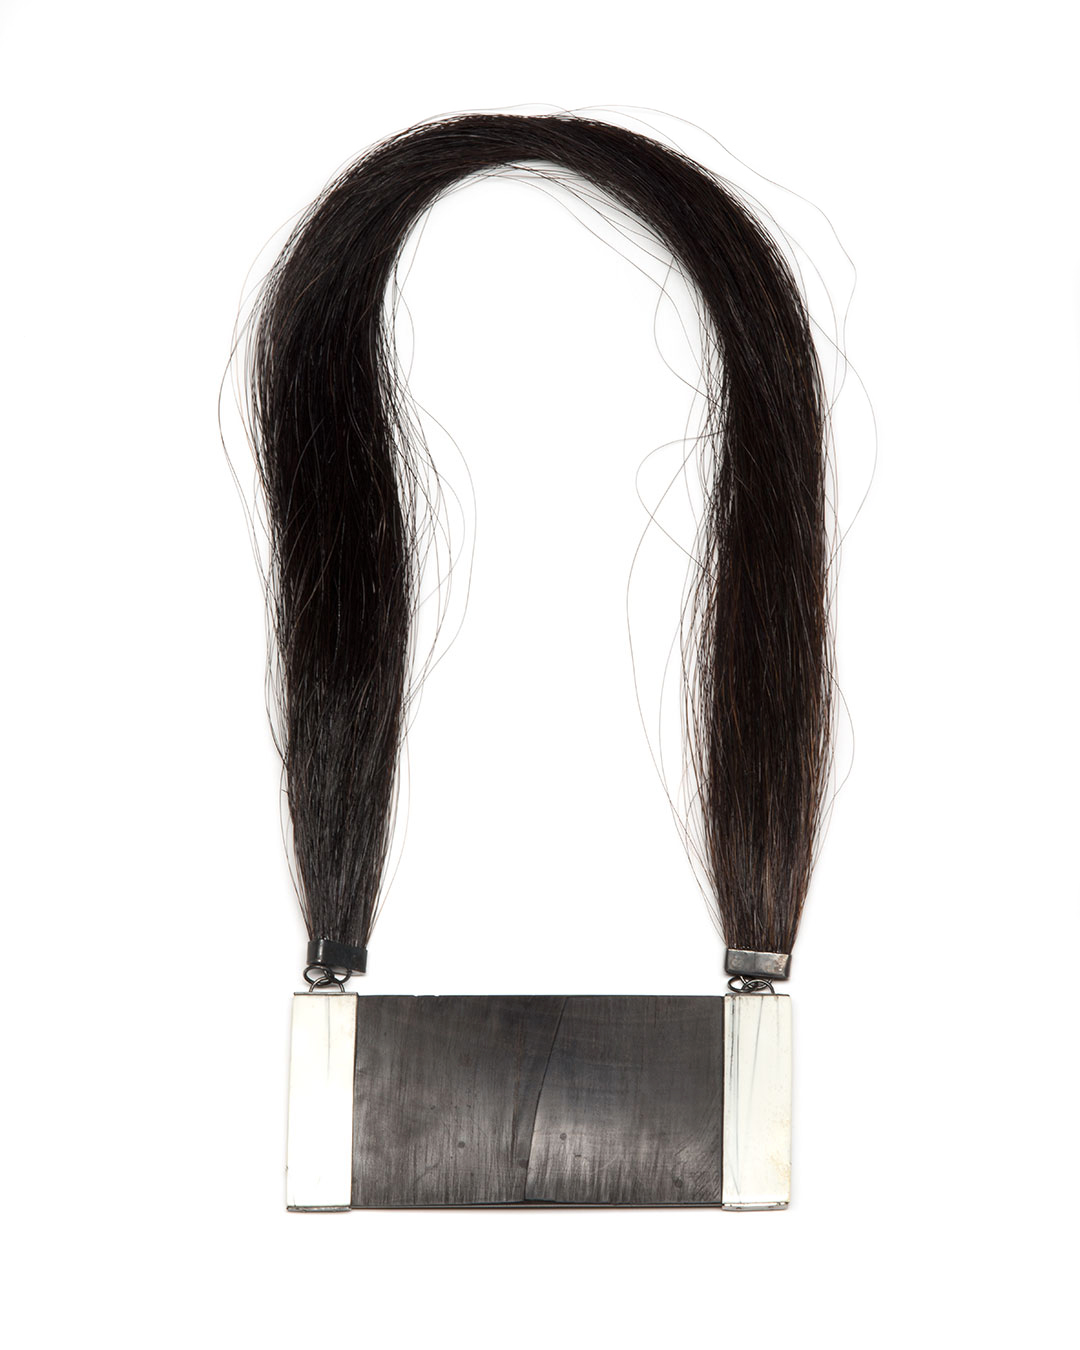 Mareen Alburg Duncker, Landscape 1, 2015, necklace; ebony, horse hair, silver plastic, 350 x 250 x 9 mm